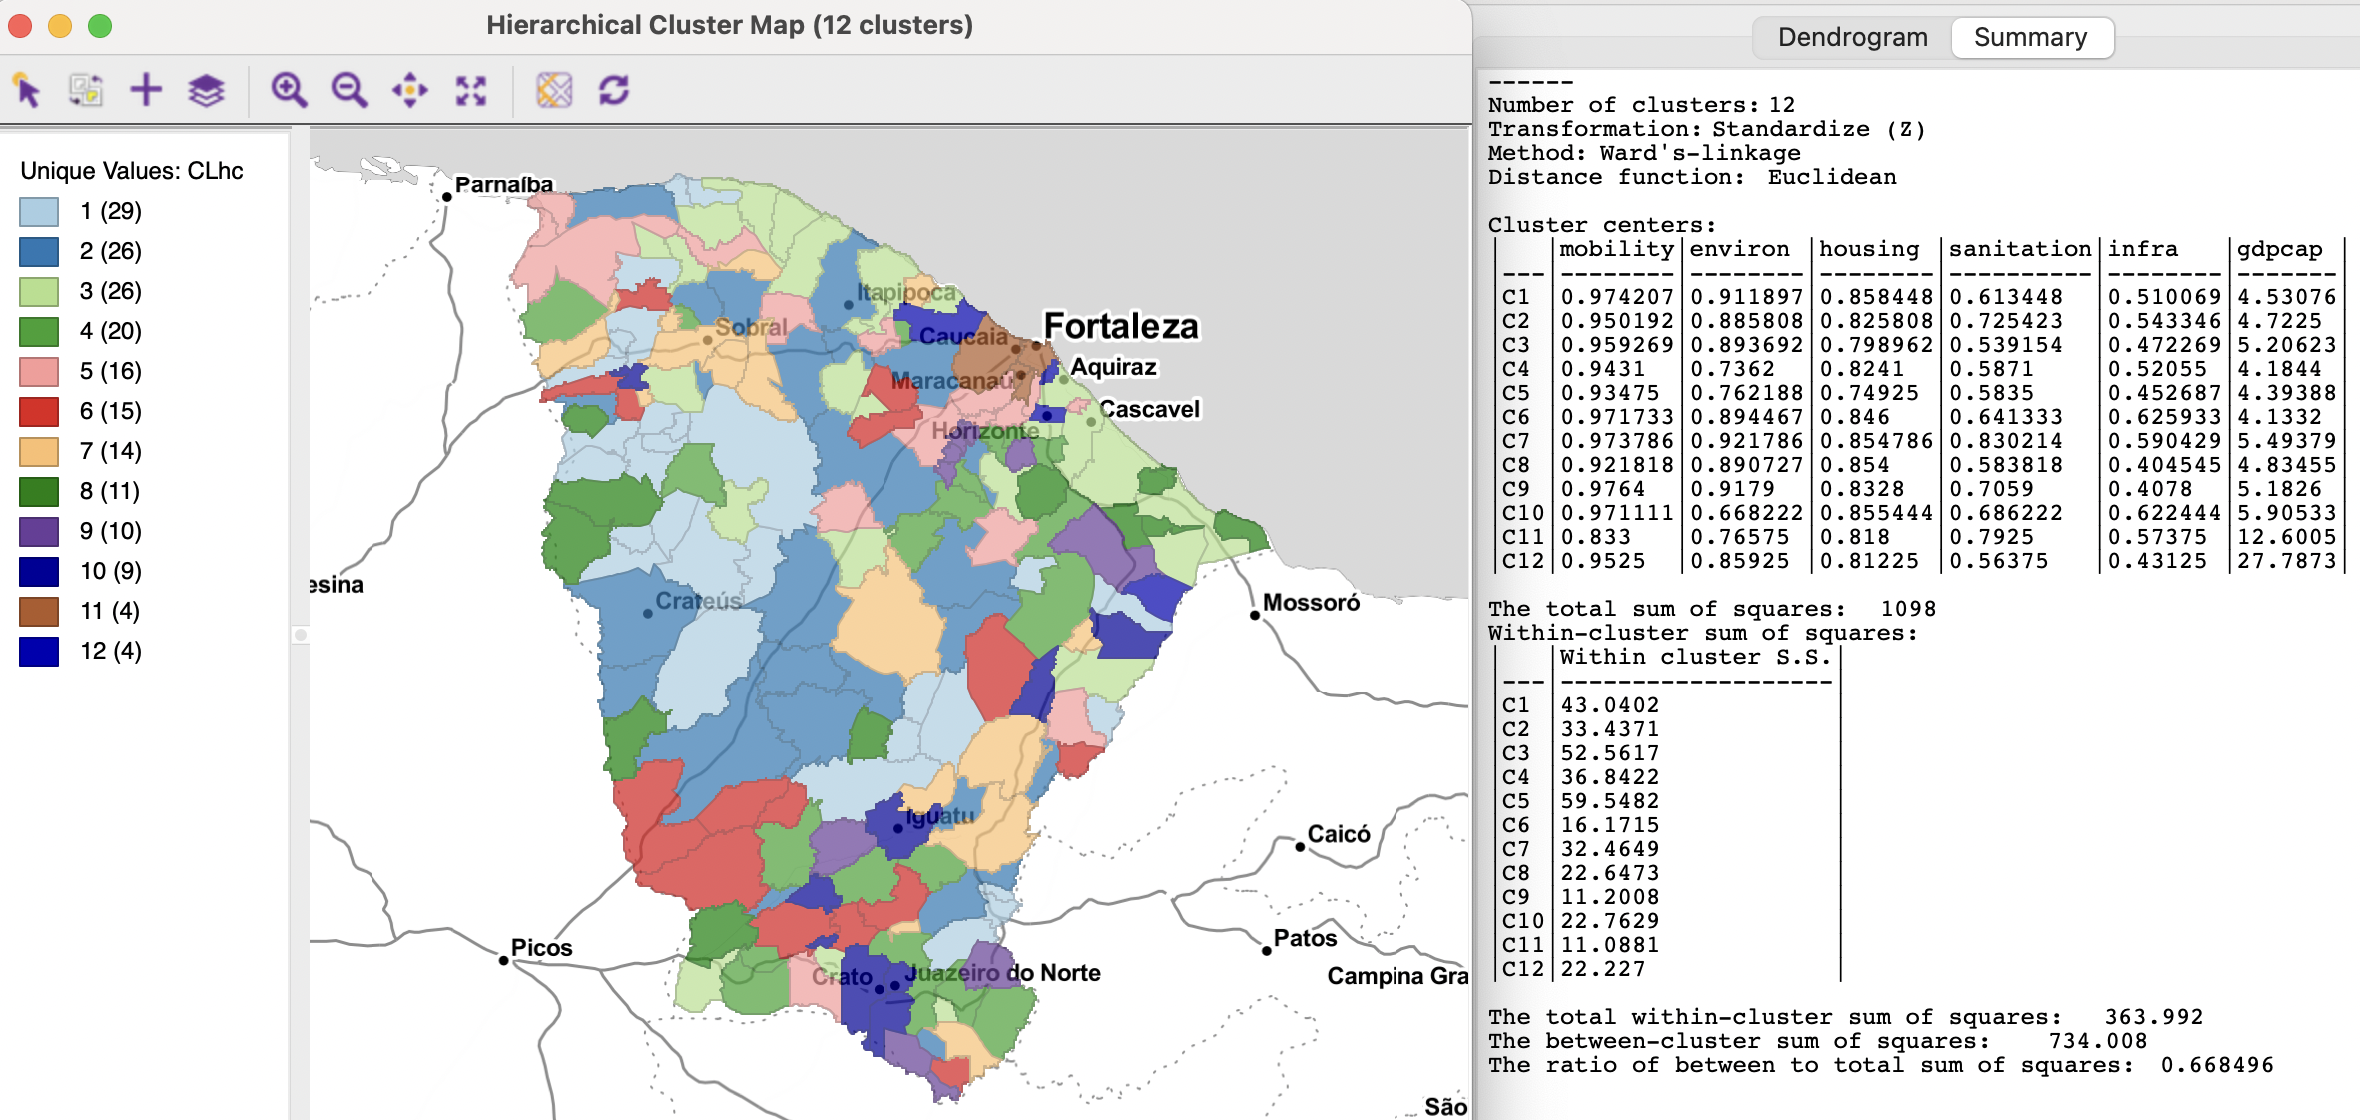 Hierarchical Clustering - Ward's method, Ceará